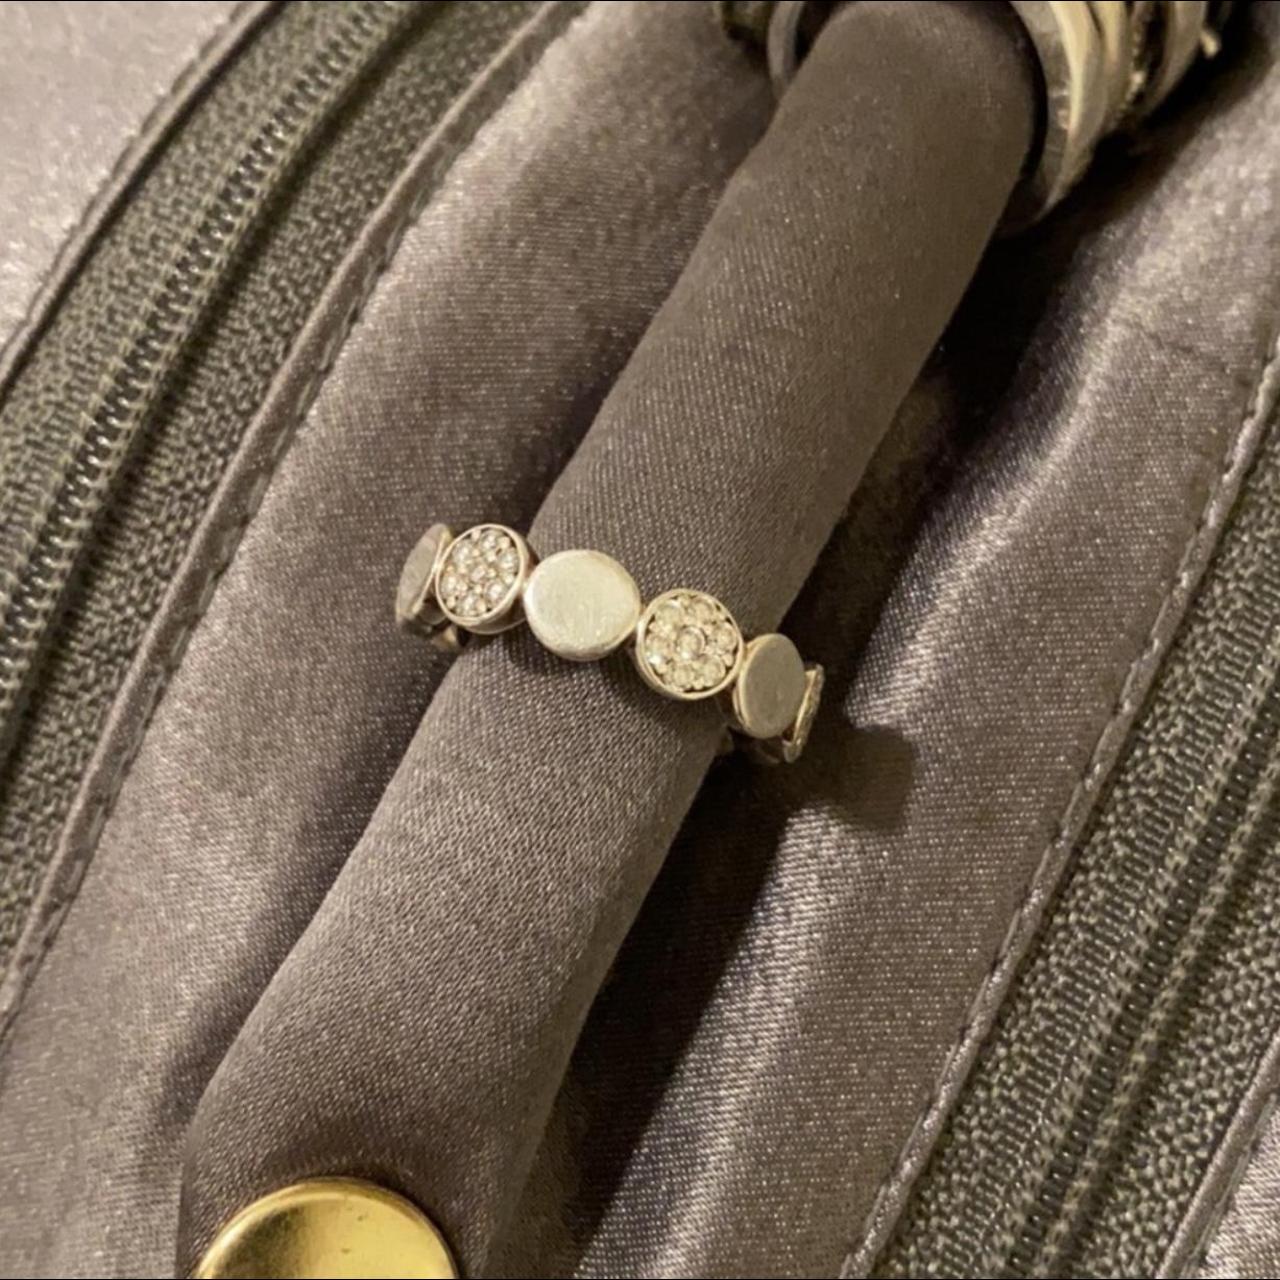 Product Image 1 - Sterling Silver Thomas Sabo ring.